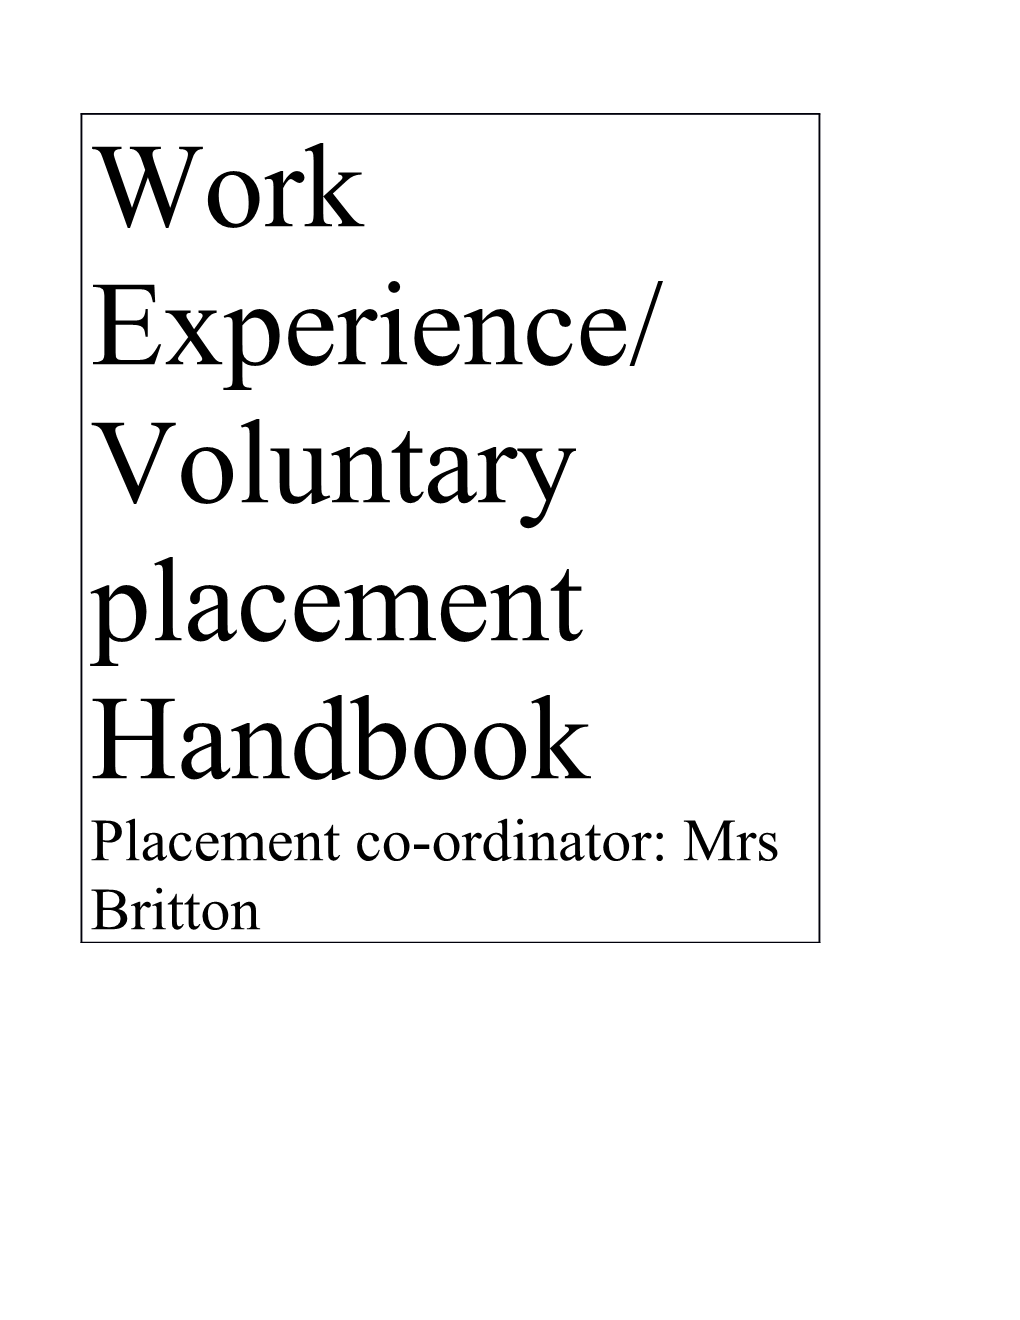 Work Experience Students Handbook